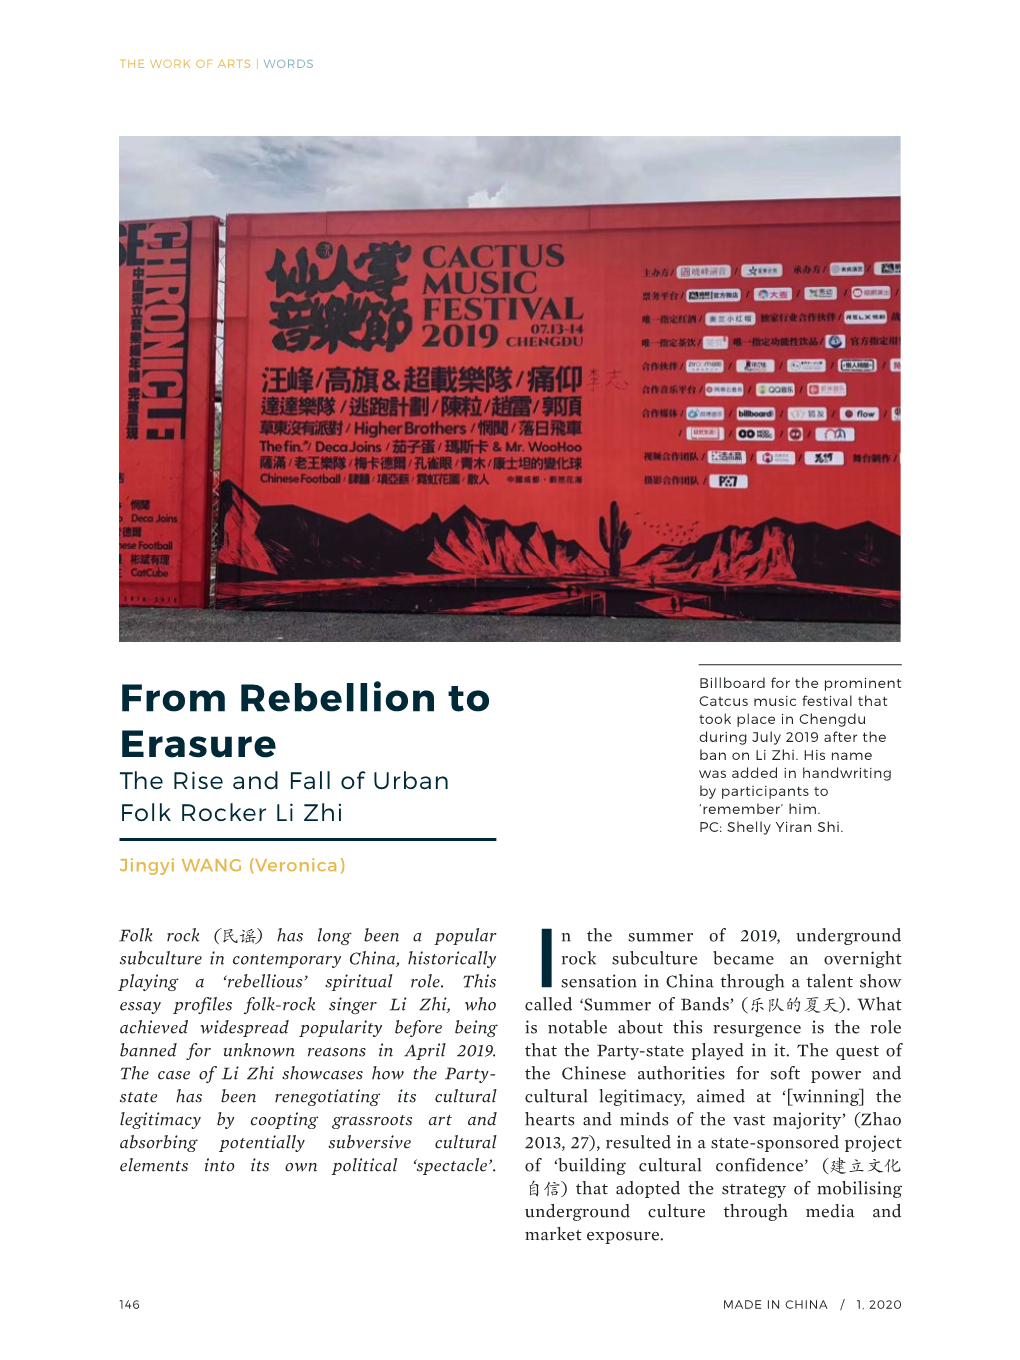 From Rebellion to Erasure: the Rise and Fall of Urban Folk Rocker Li